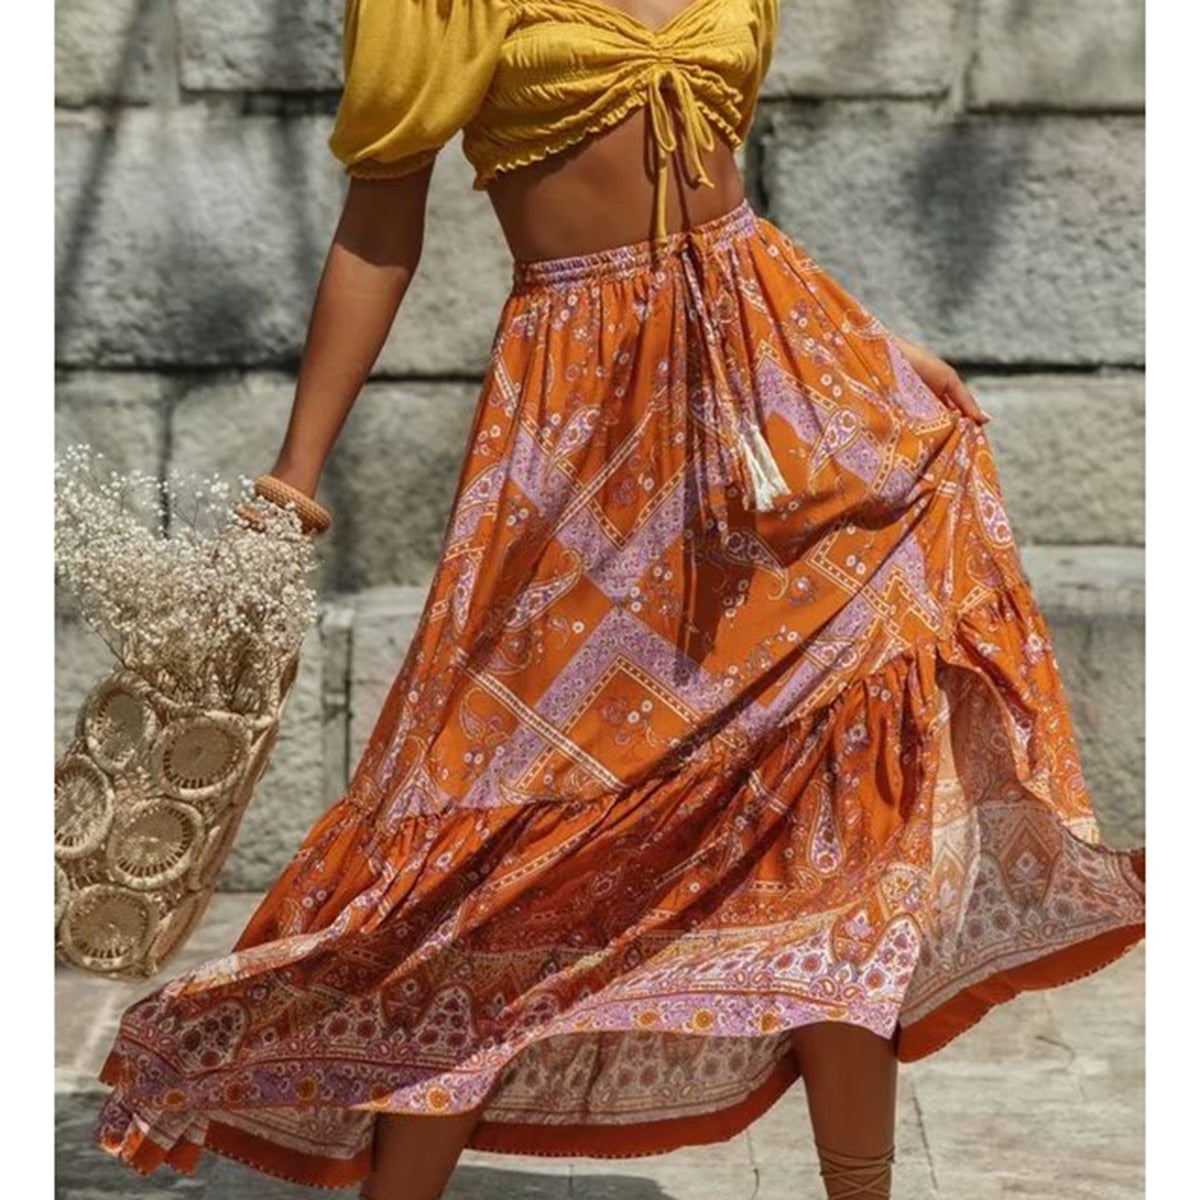 Jastie Women Maxi Skirt Cotton Orange Floral Print Split Sexy Summer Skirts Vintage Beach Casual Clothes Boho Long Women Skirts